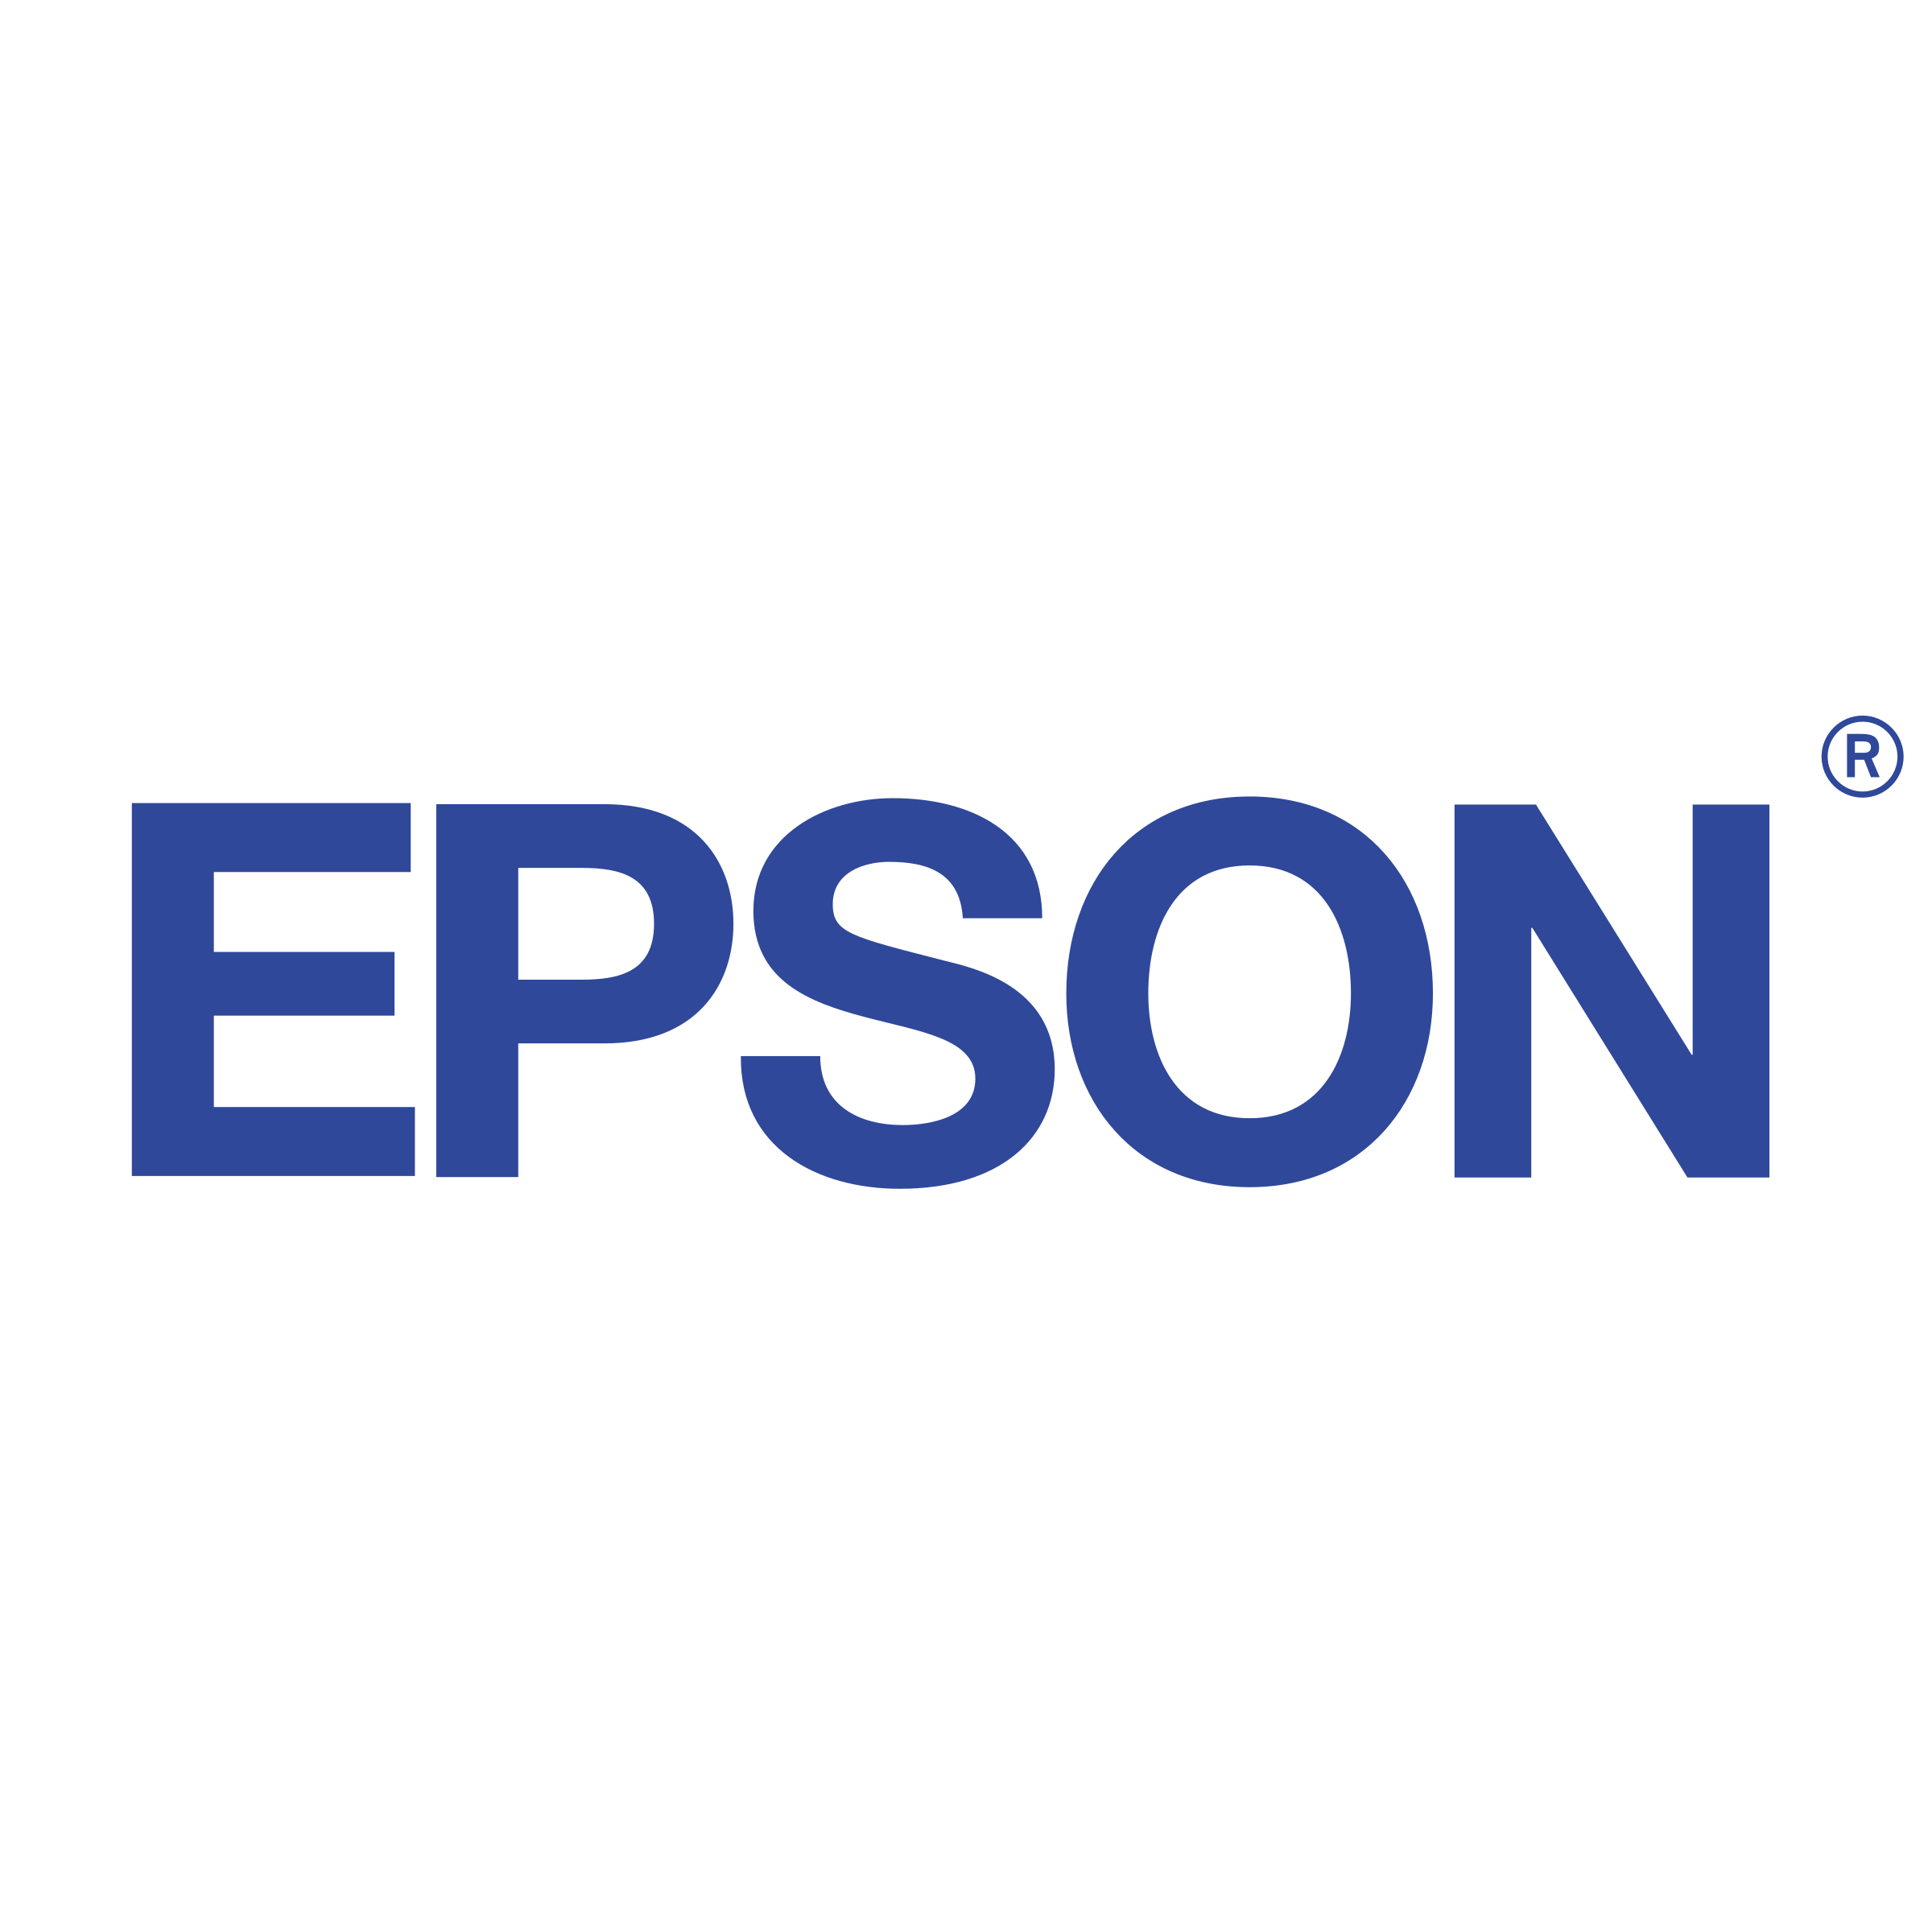 epson-2-logo-png-transparent